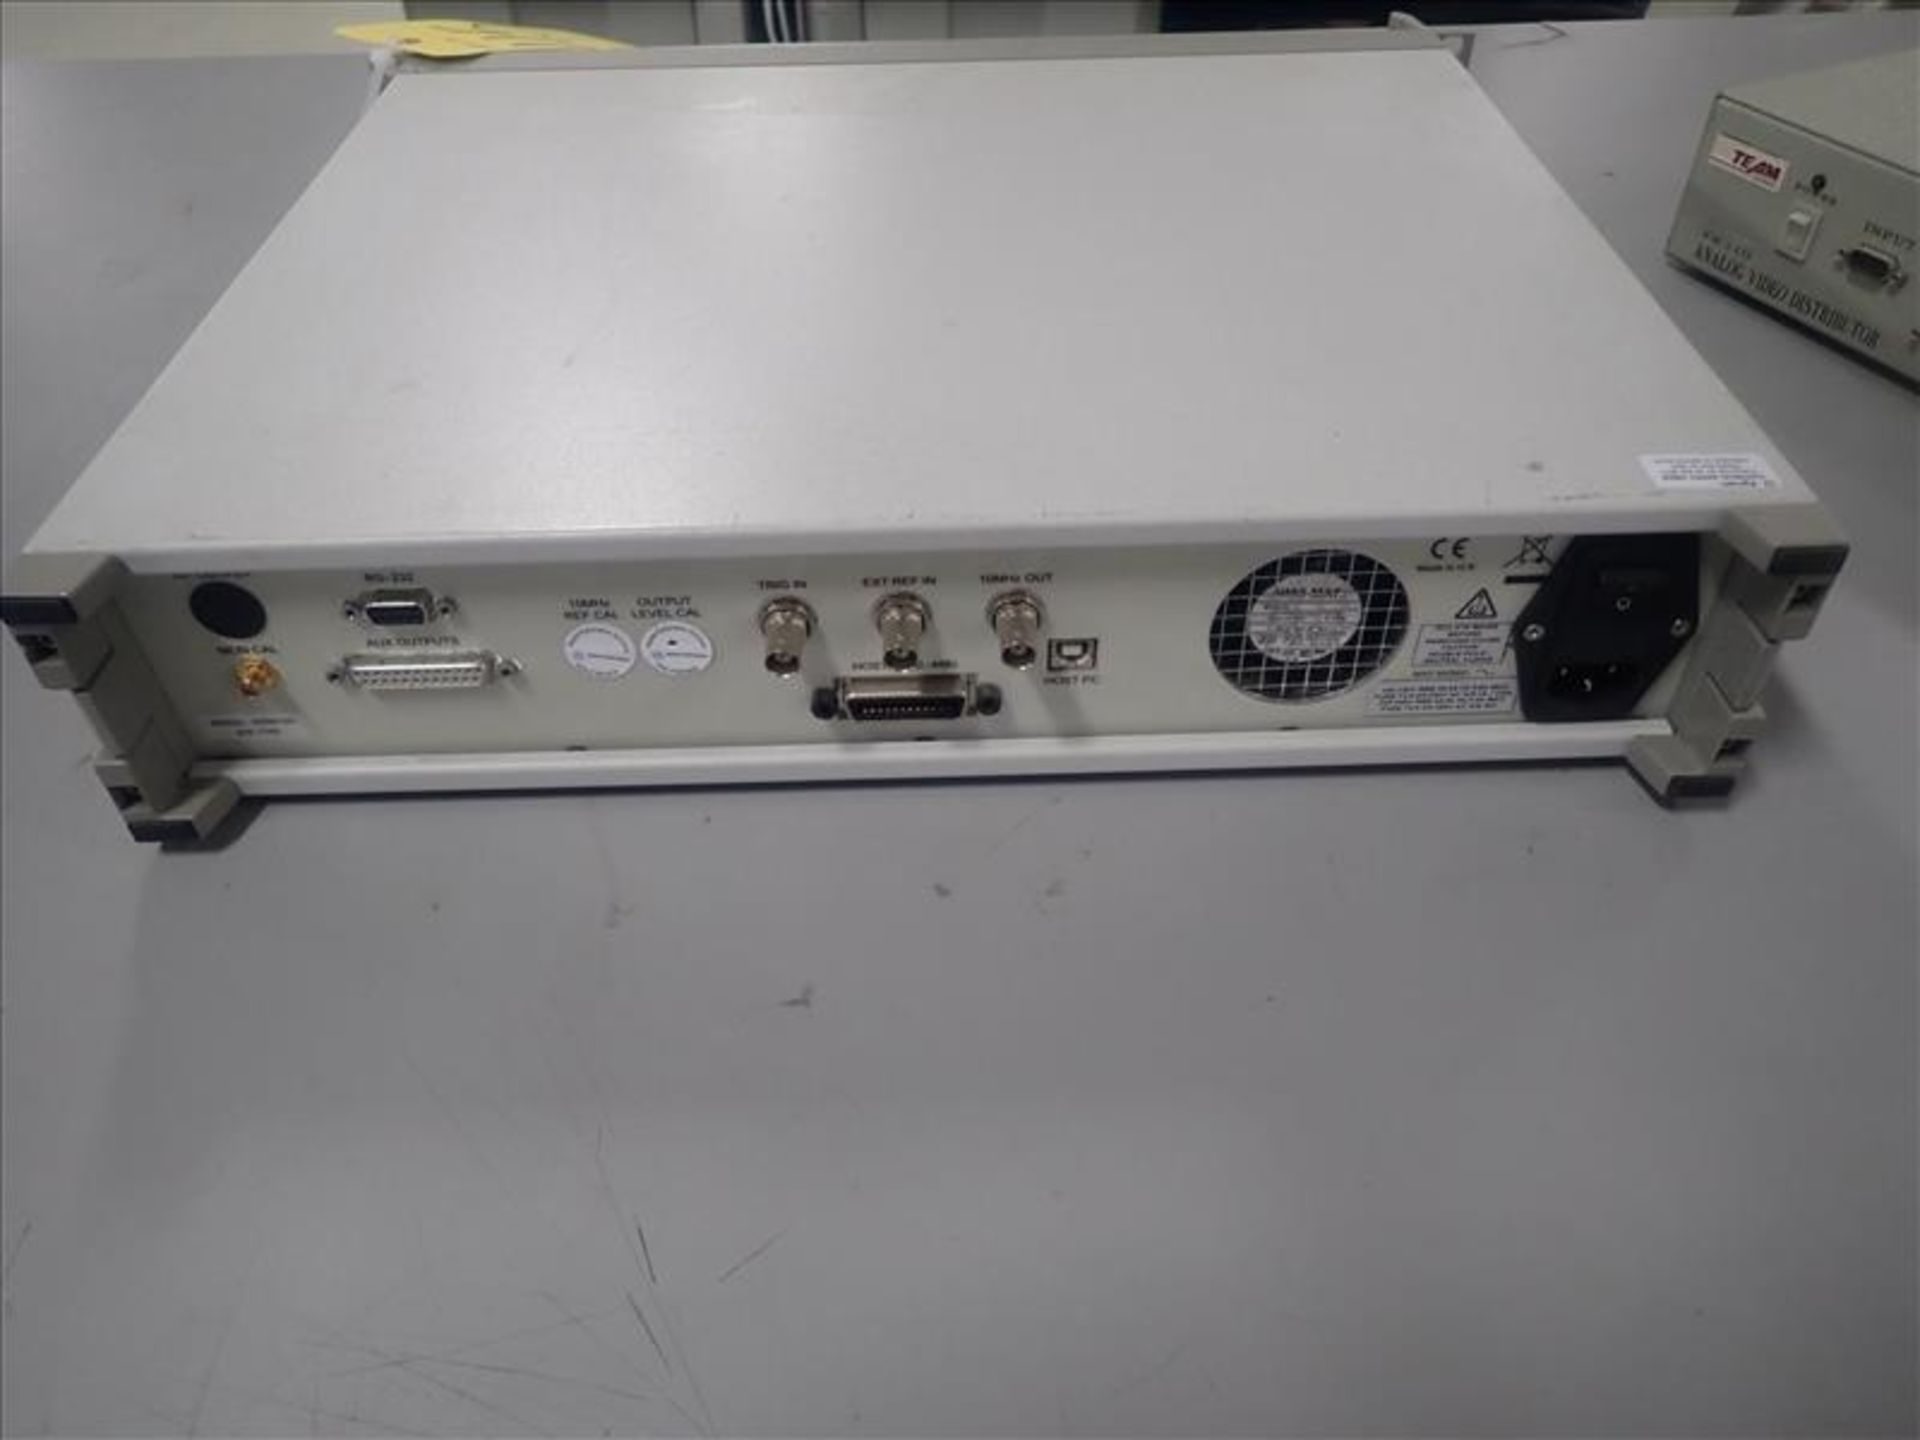 Spirent GS56100 GPS/SBAS signal generator - Image 2 of 3